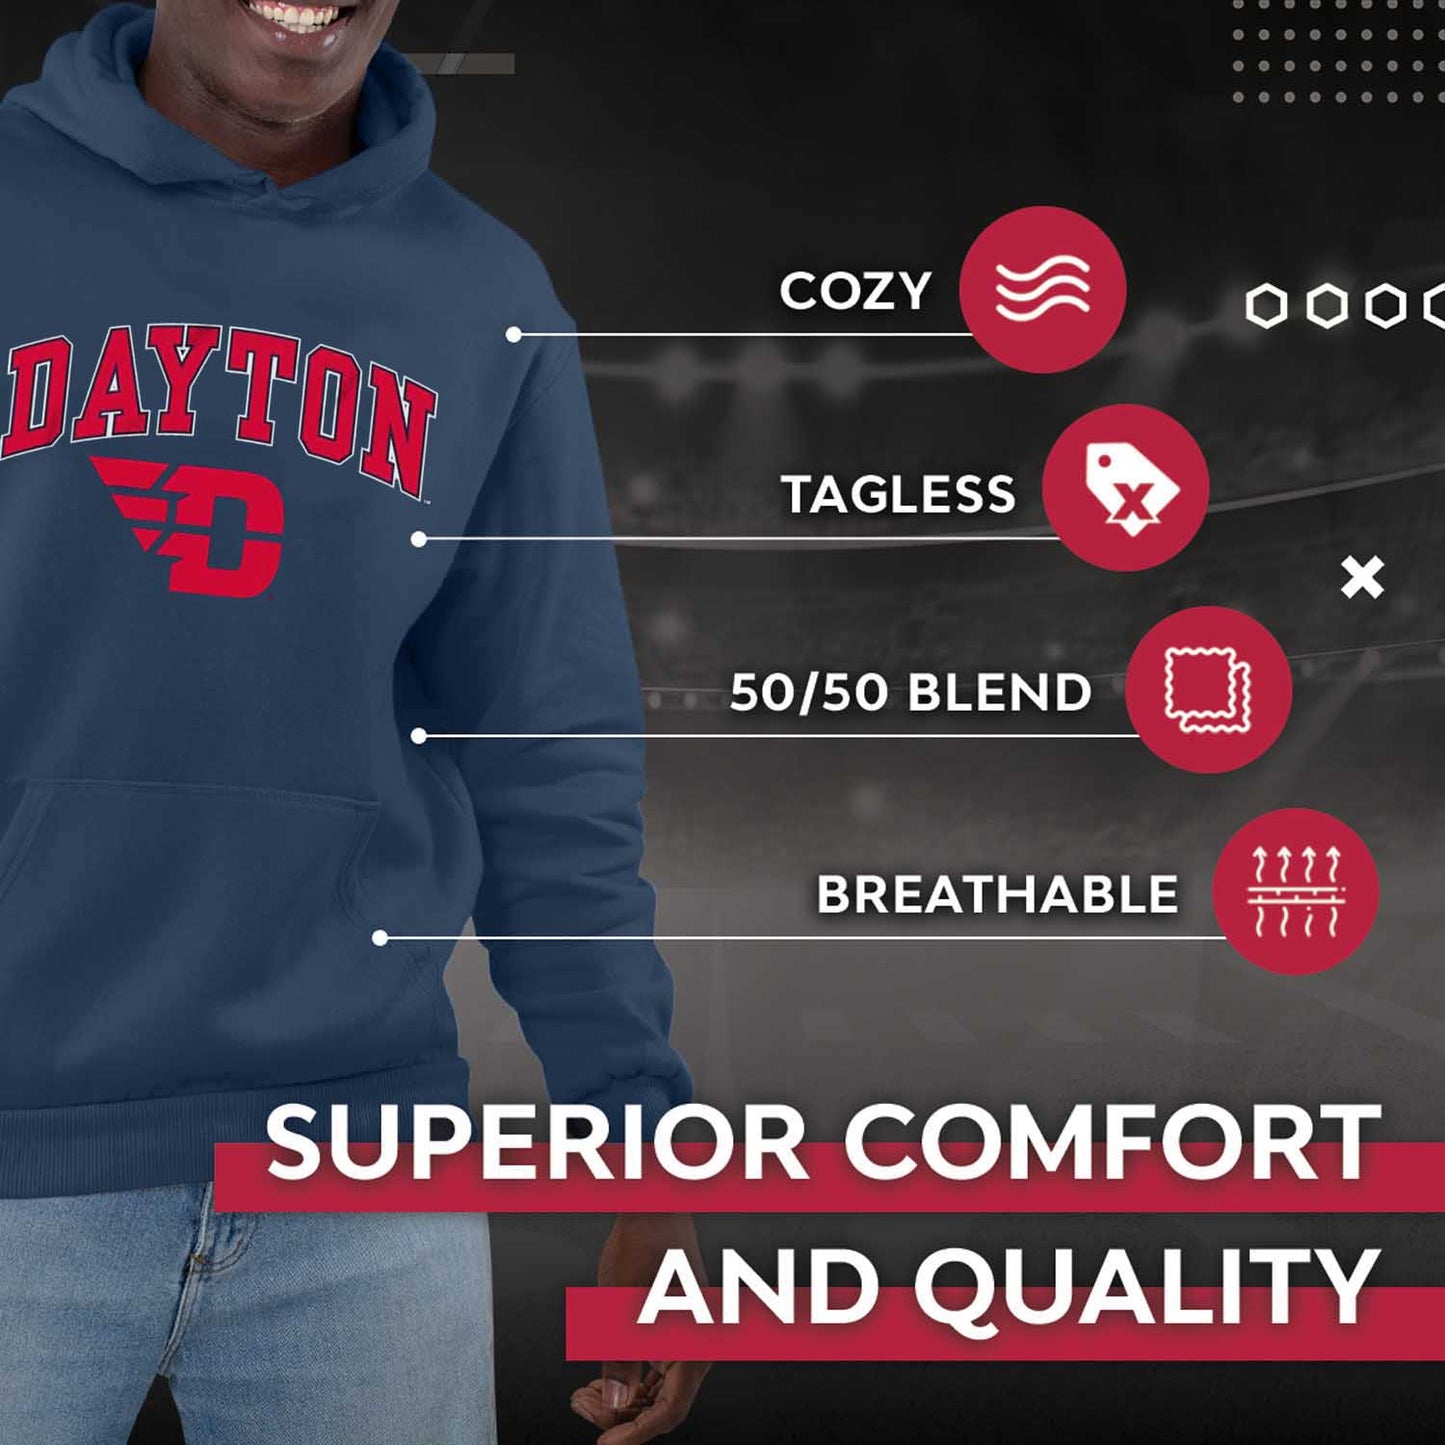 Dayton Flyers Adult Arch & Logo Soft Style Gameday Hooded Sweatshirt - Navy